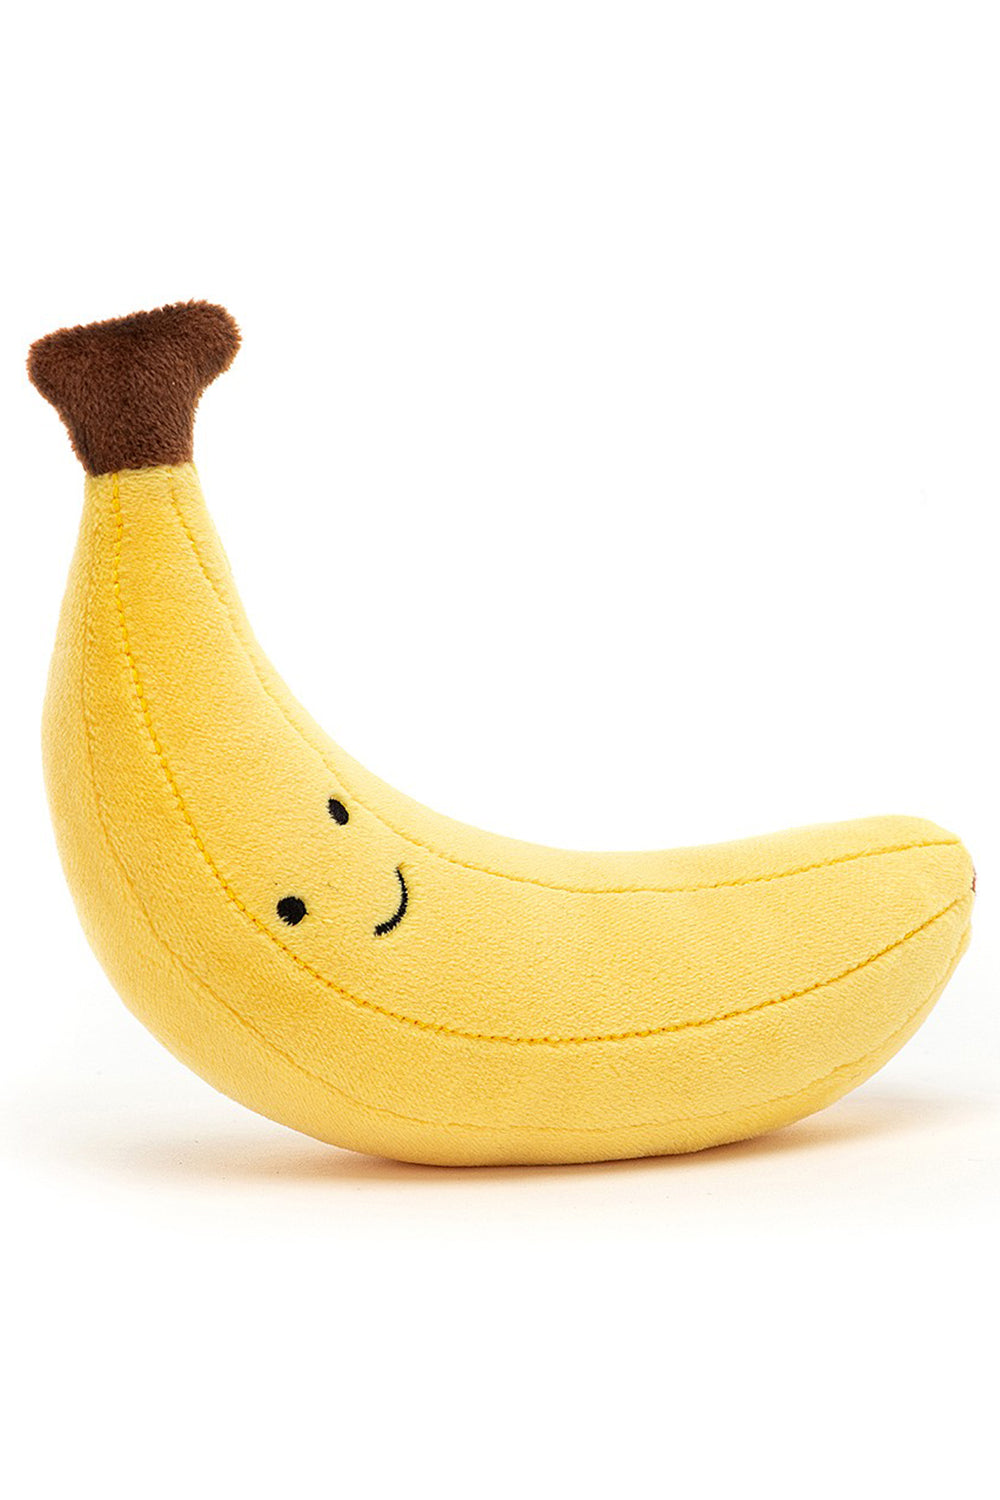 JELLYCAT Fabulous Fruit - Banana